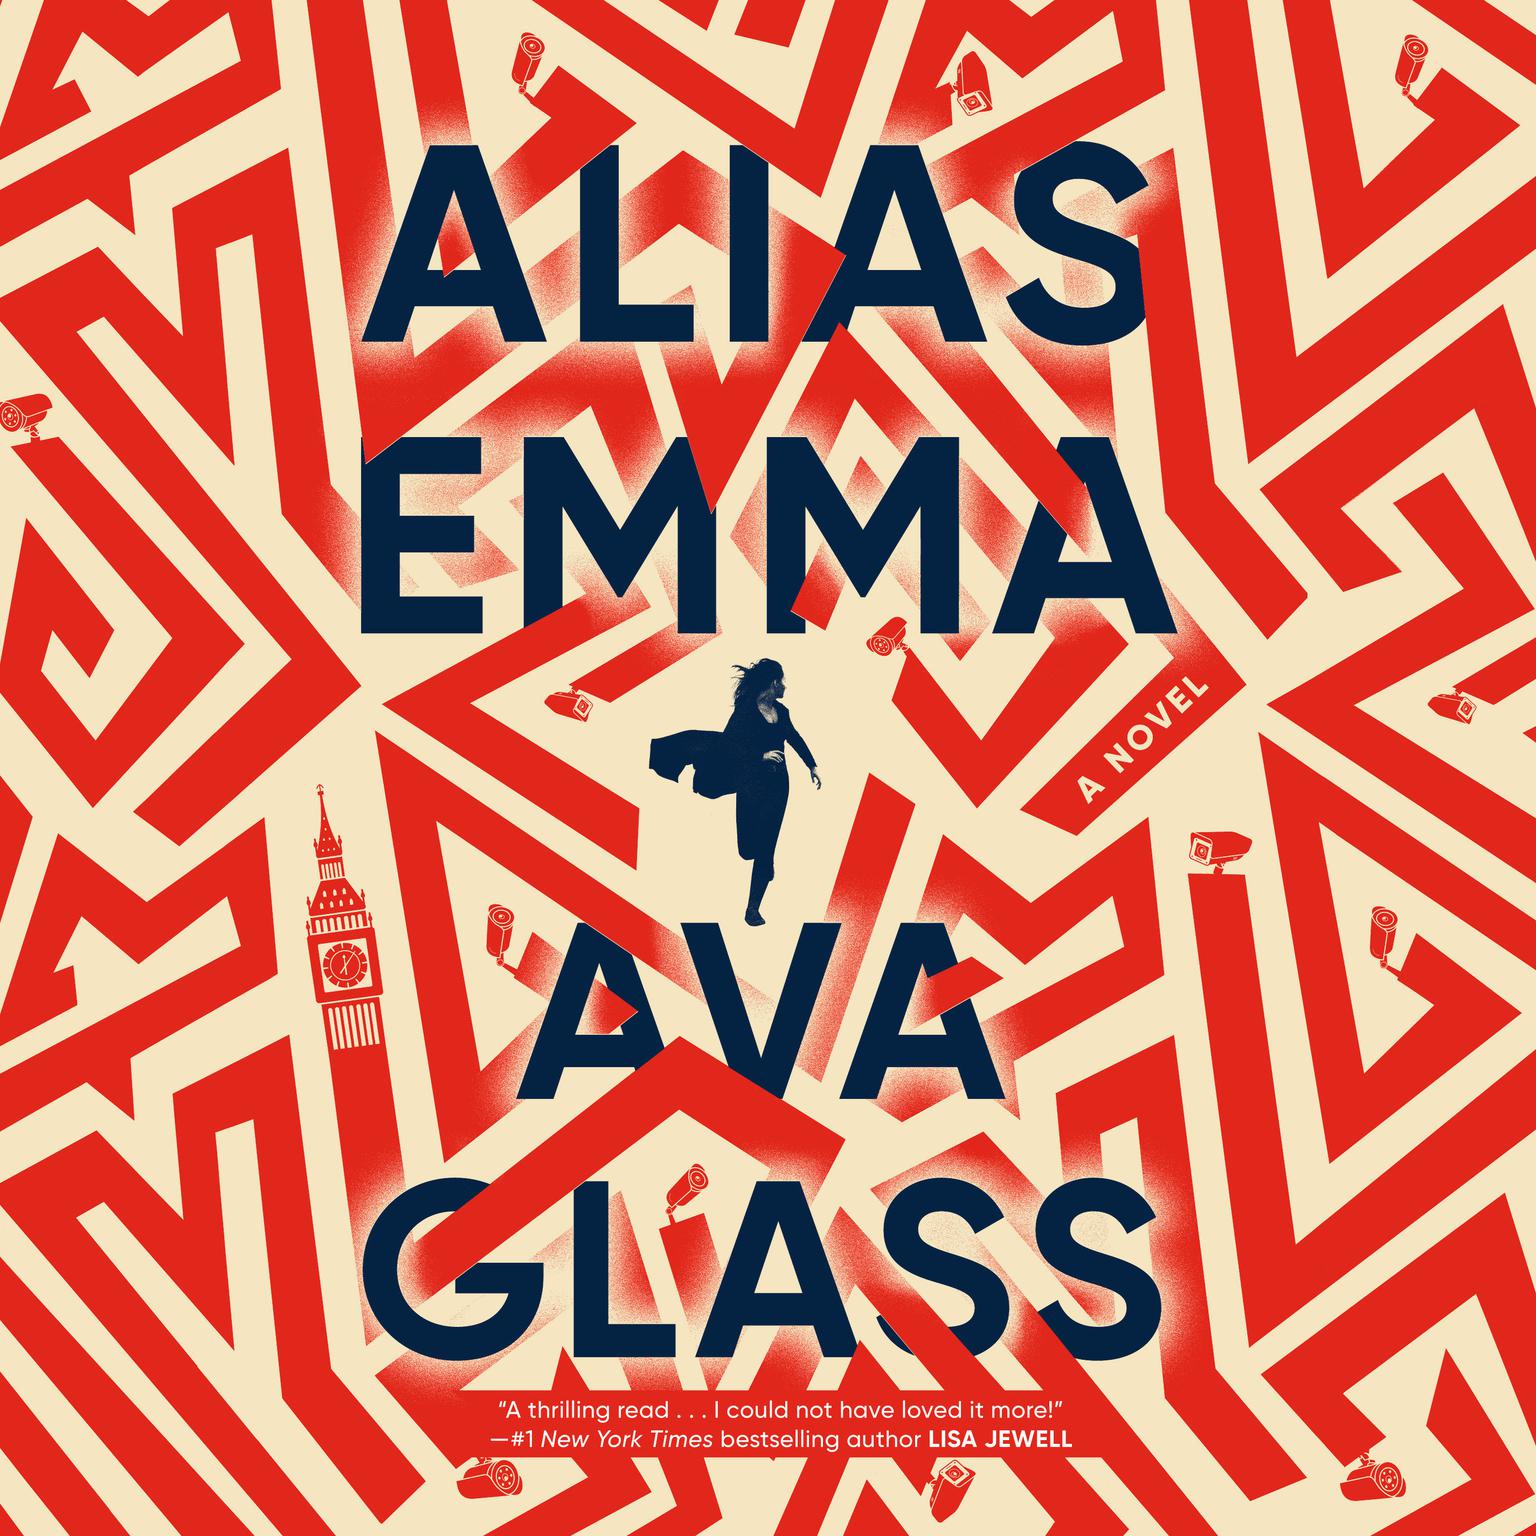 Alias Emma: A Novel Audiobook, by Ava Glass